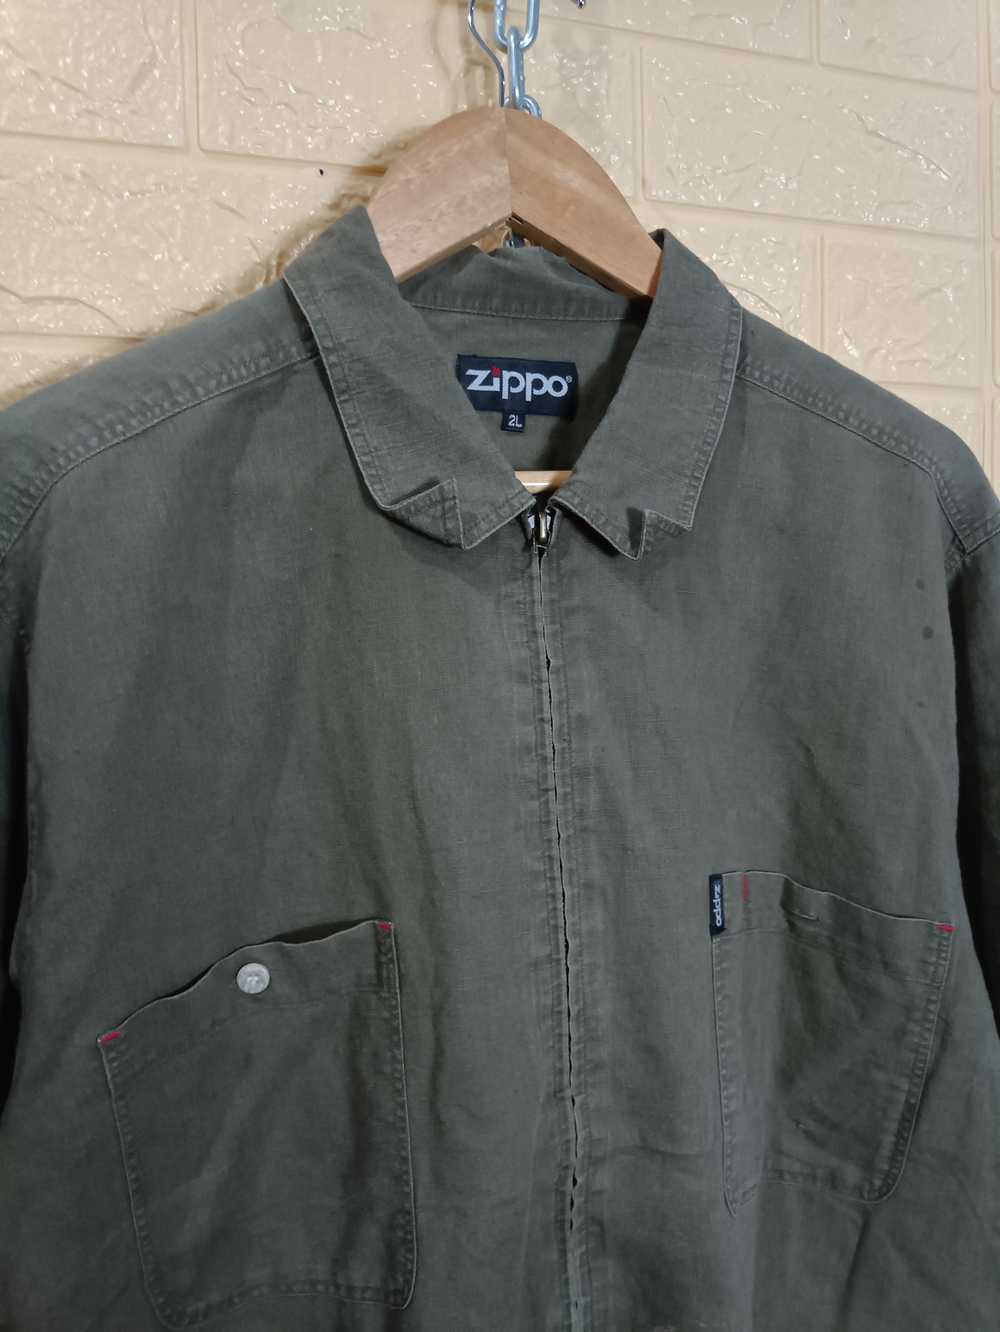 Zippo - Zippo Zipper Jacket - image 5